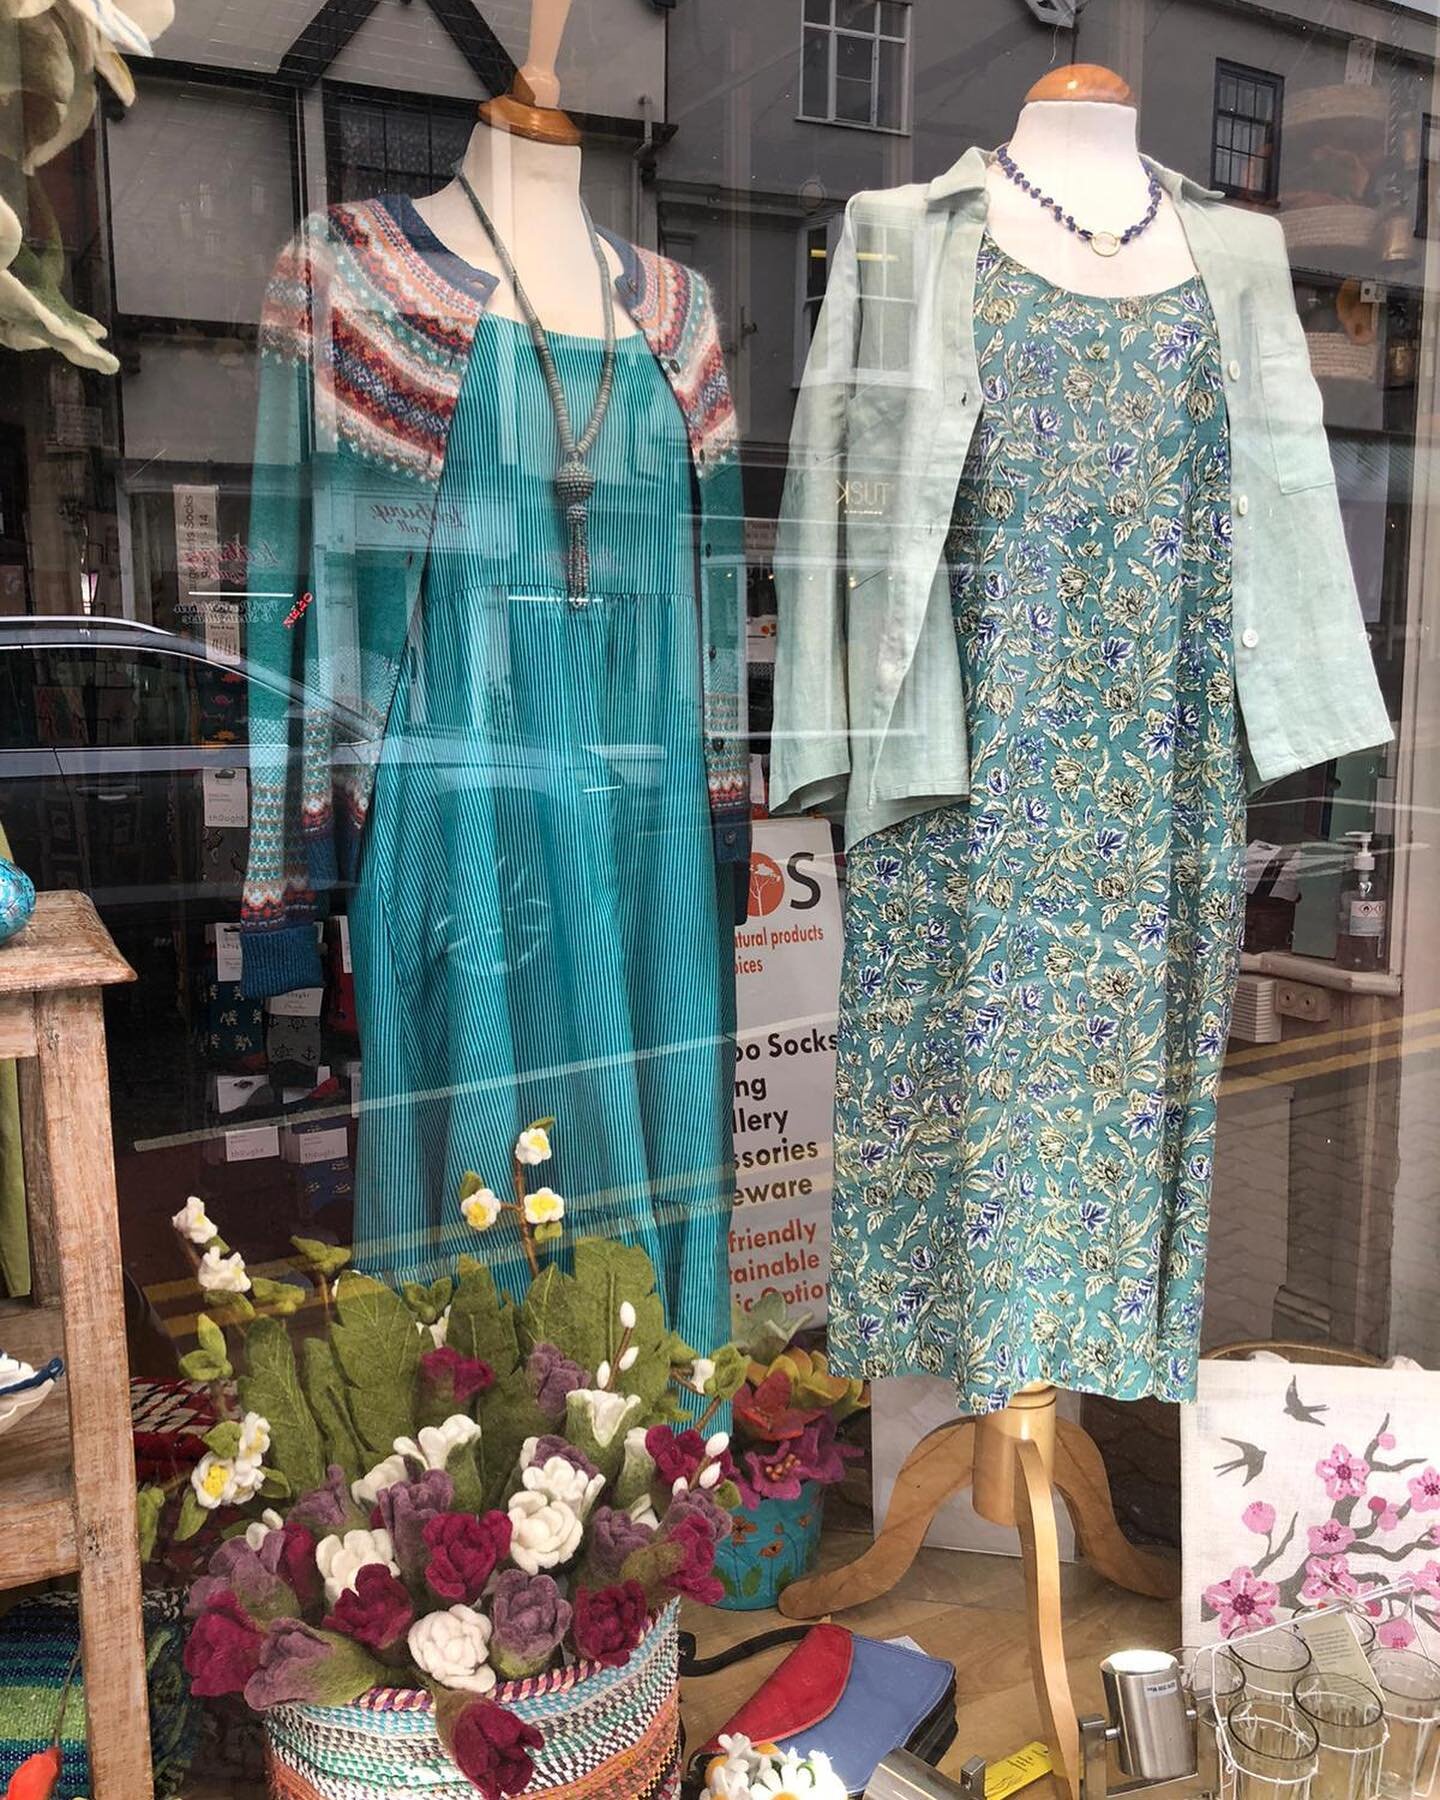 Window looking good - Eribe, Bibico and Nomads clothing. Super sustainable brands - we love them #eribeknitwear #nomadsclothing #bibico #sustainable #organiccotton #merinowool #whomadeyourclothes #loveledbury #ethosledbury #herefordshire #summercloth